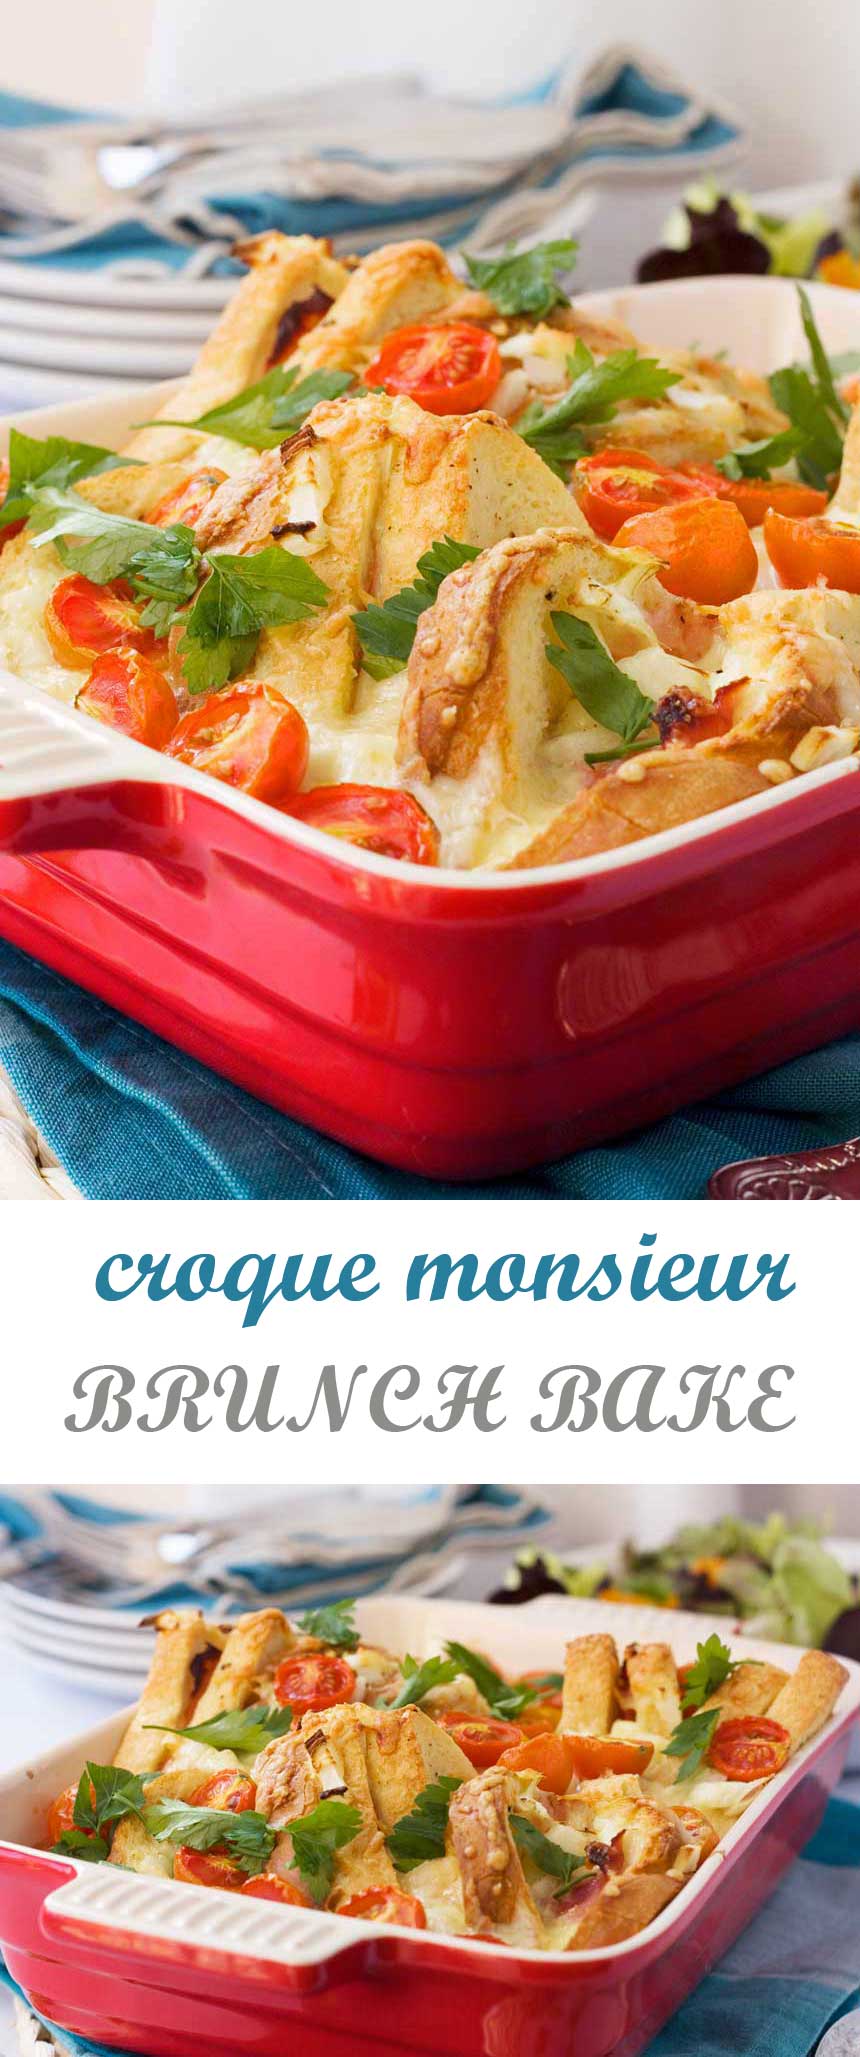 Croque monsieur brunch bake